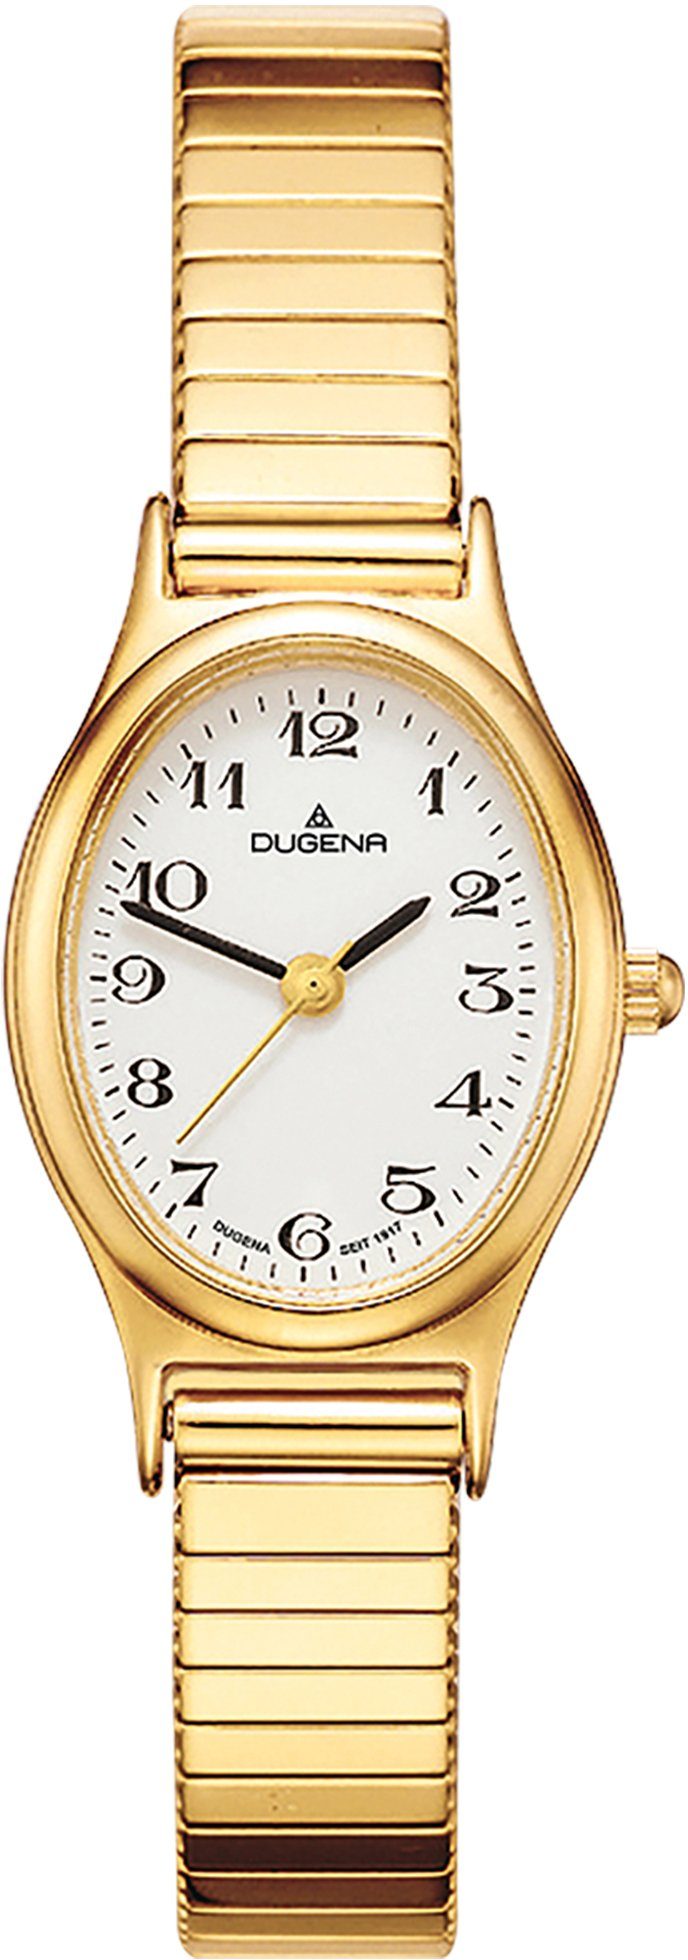 Dugena Quarzuhr Vintage Comfort, 4168003 Gold